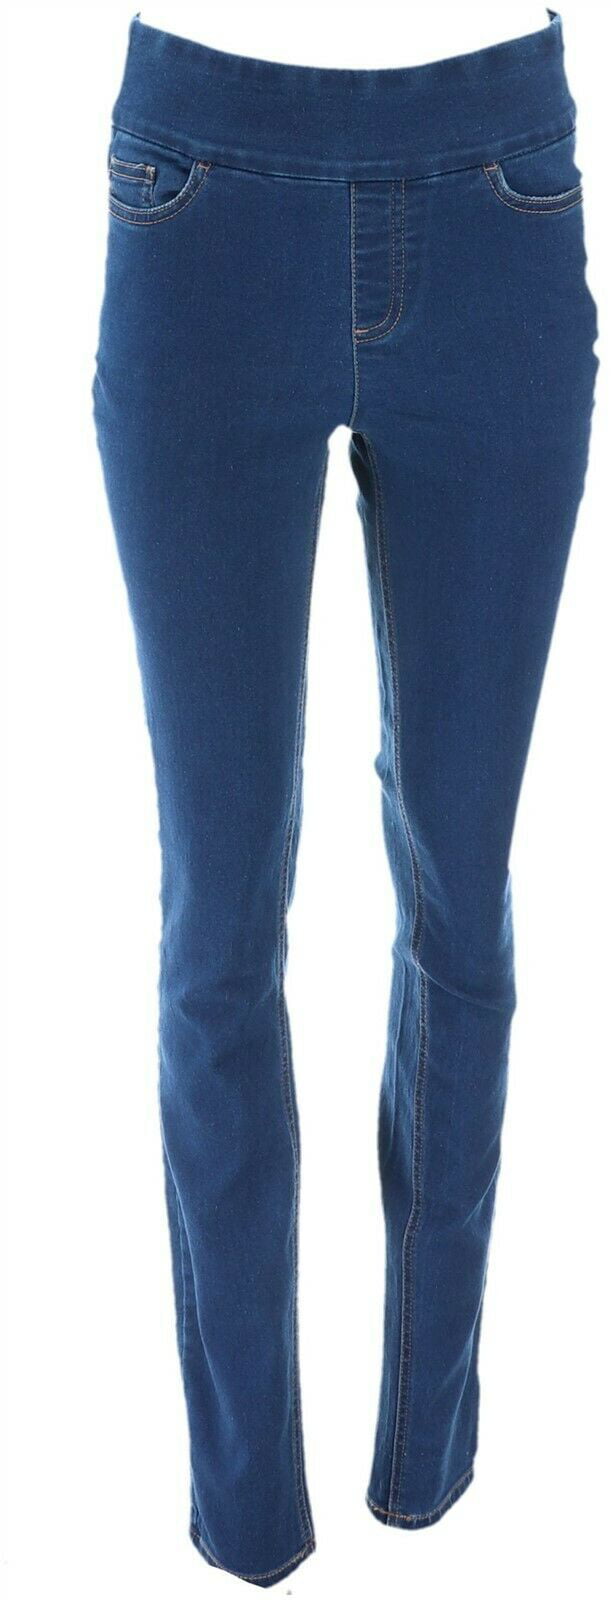 Denim & Co. - Denim & Co Tall Stretch Smooth Waist 5-Pocket Jeans Women ...